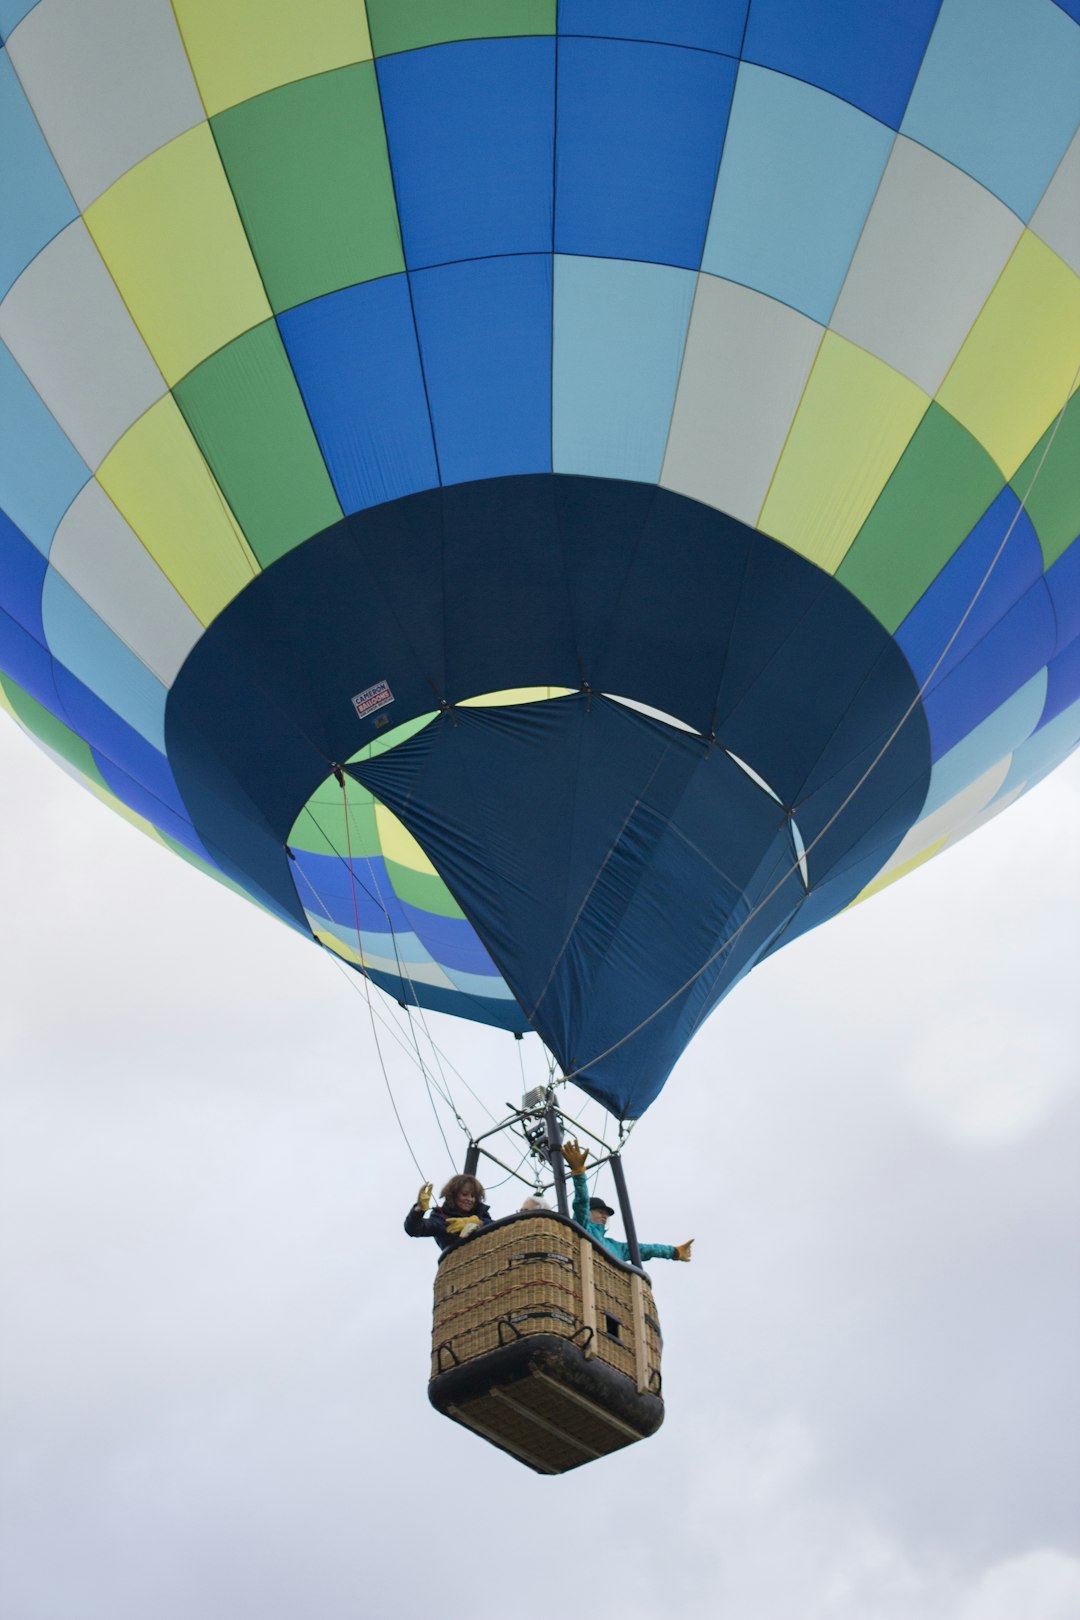 Hot air ballooning photo spot Albuquerque International Balloon Fiesta United States